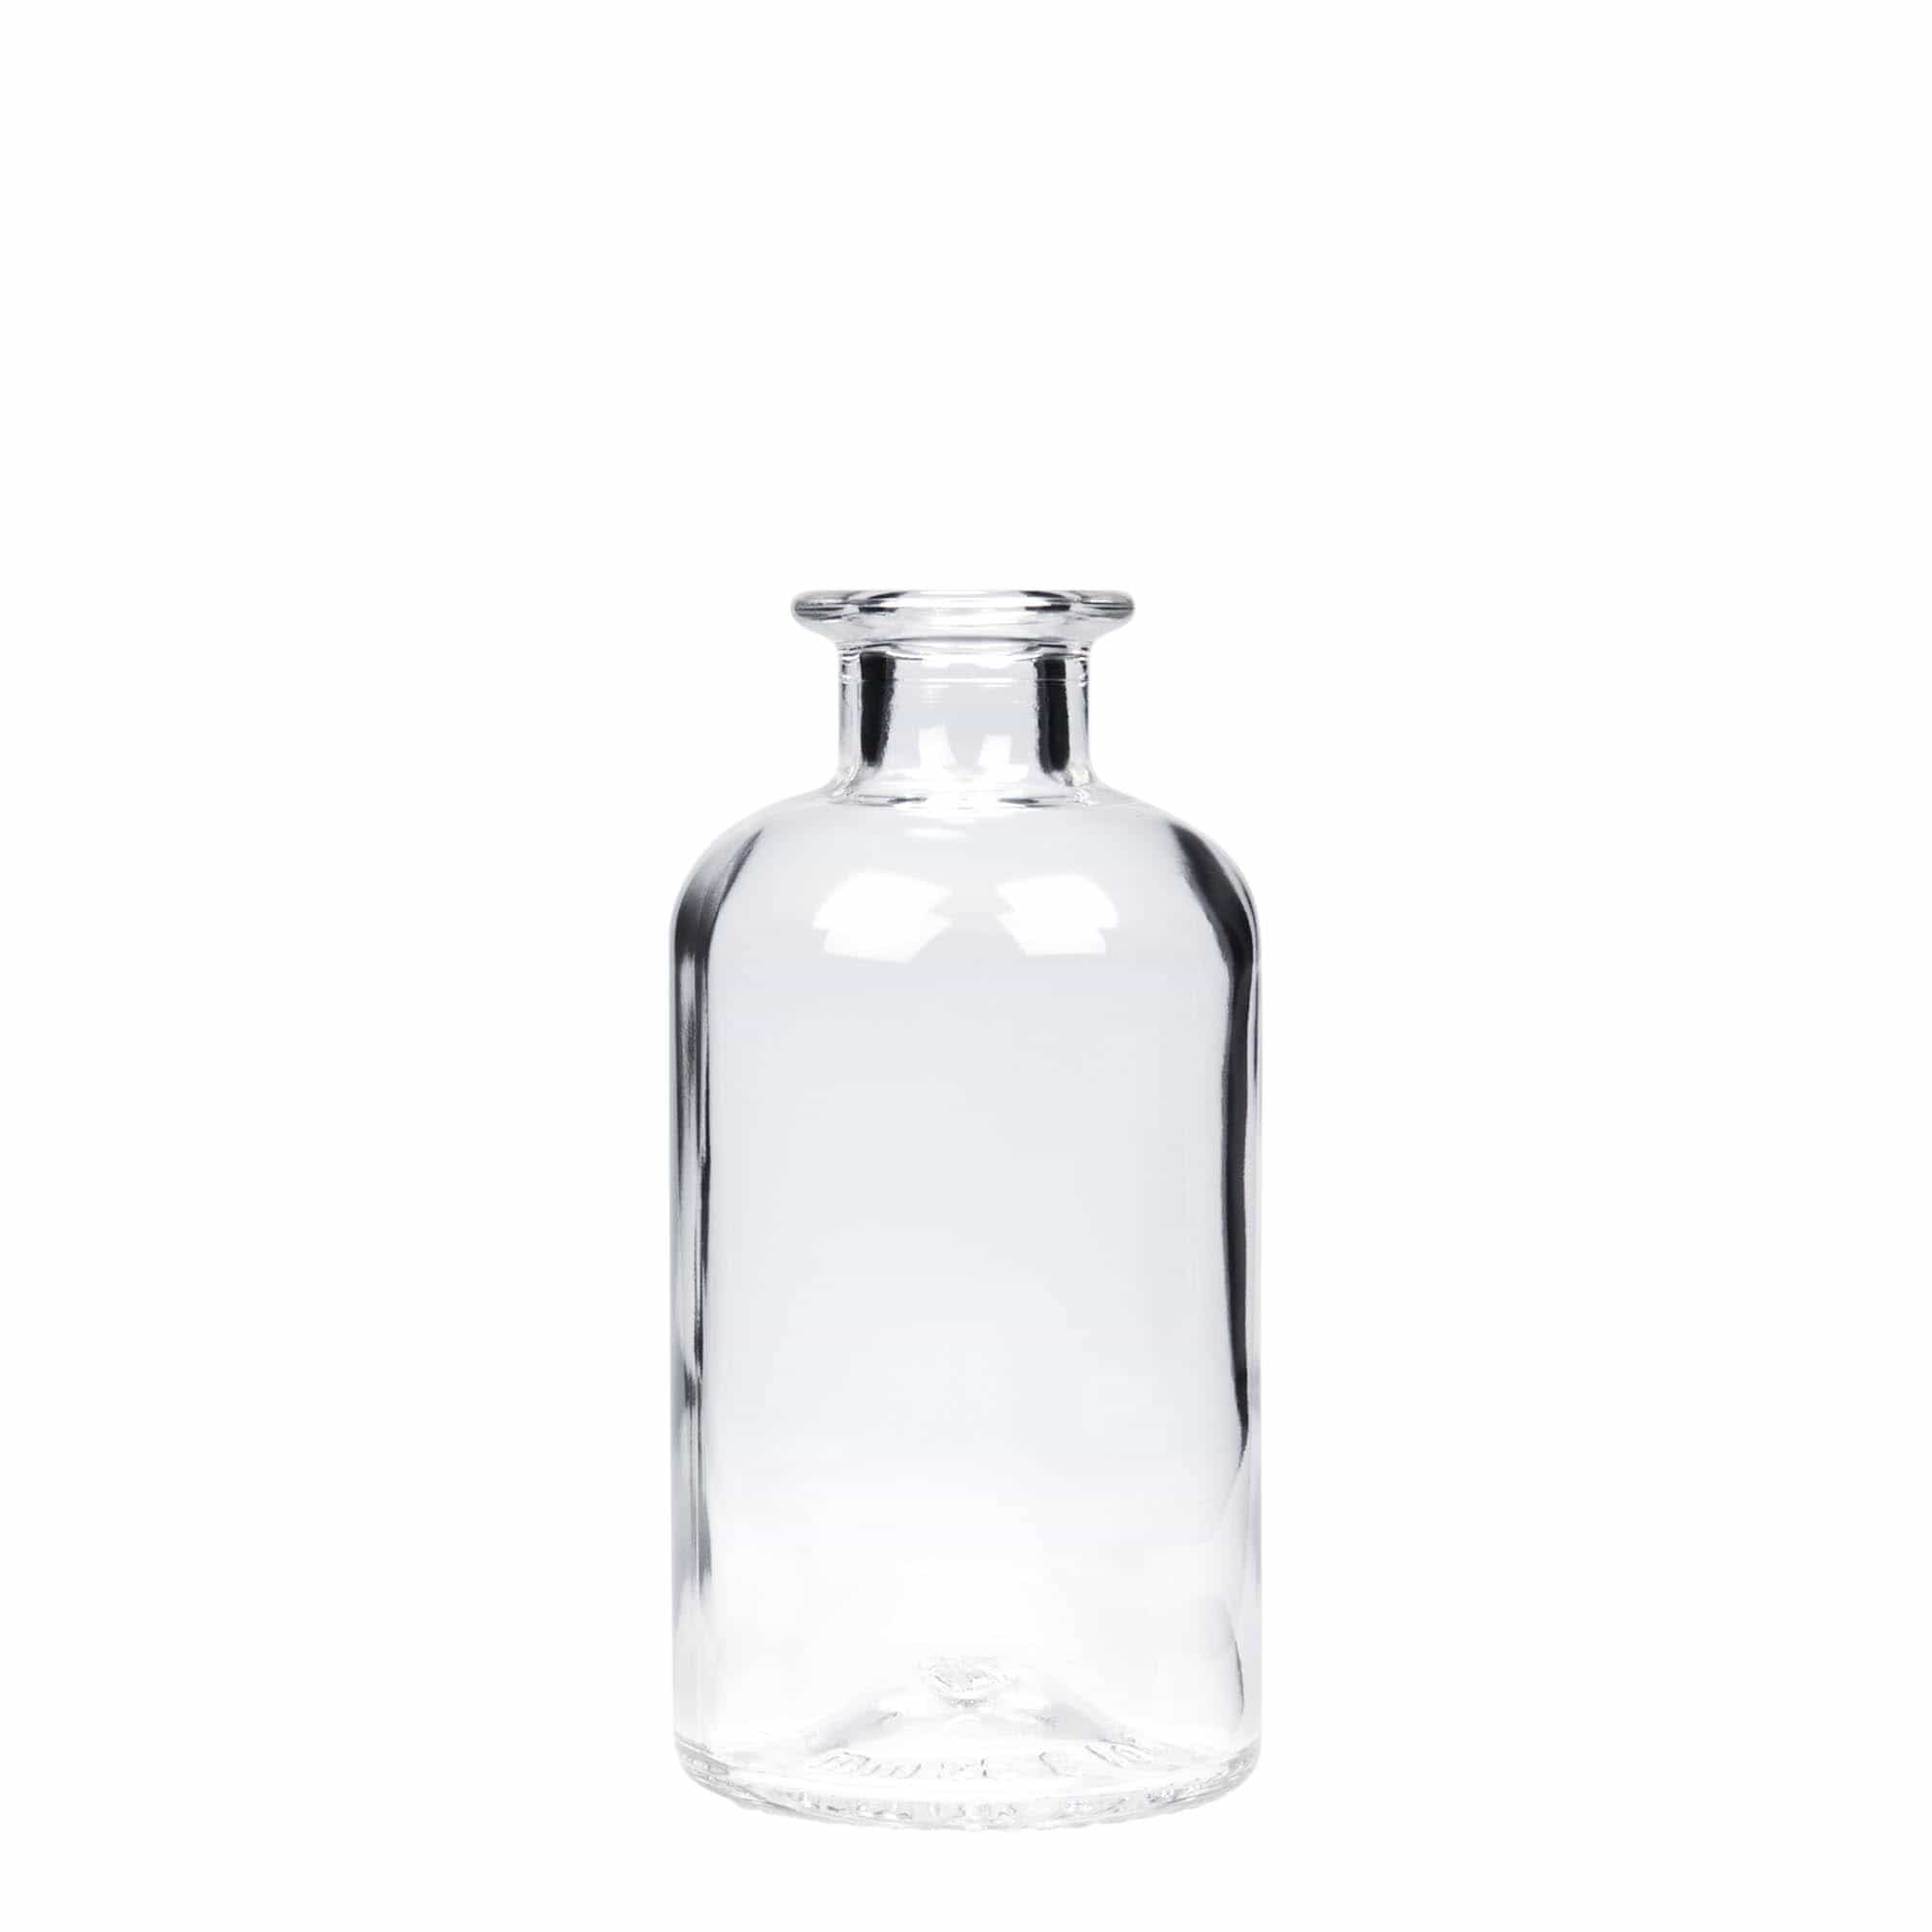 250 ml glass apothecary bottle, closure: cork